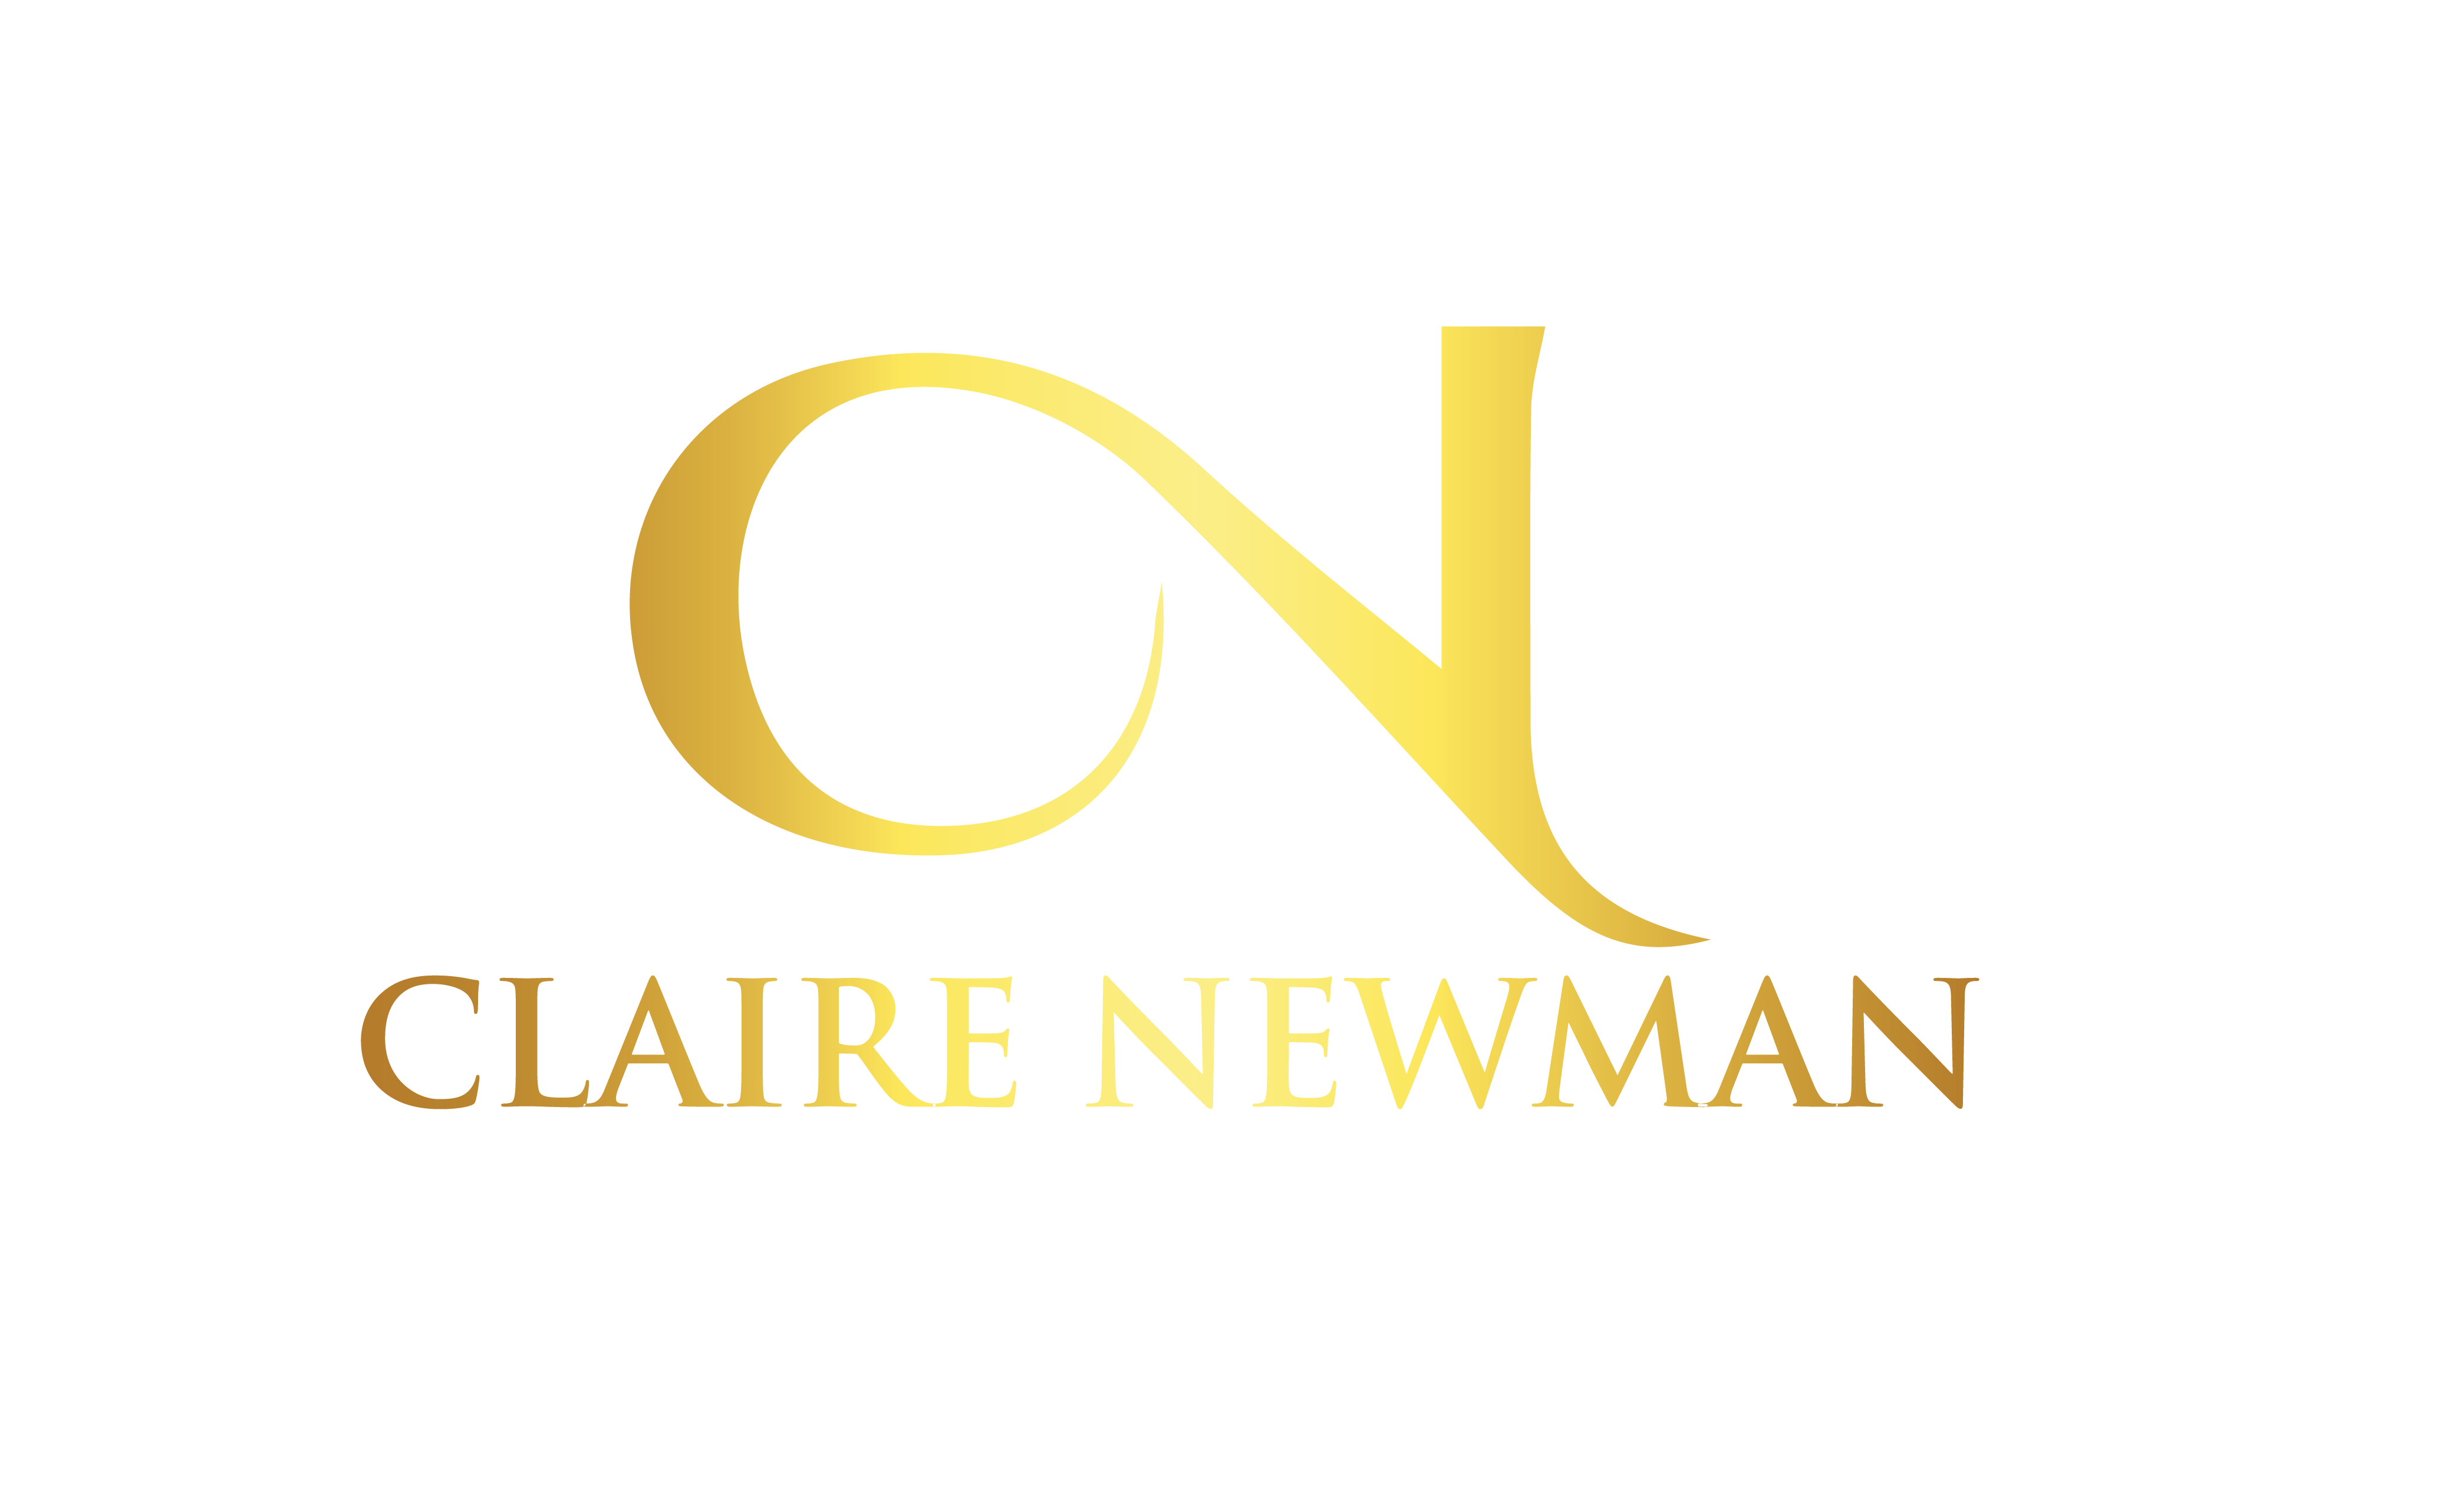 CLAIRE NEWMAN